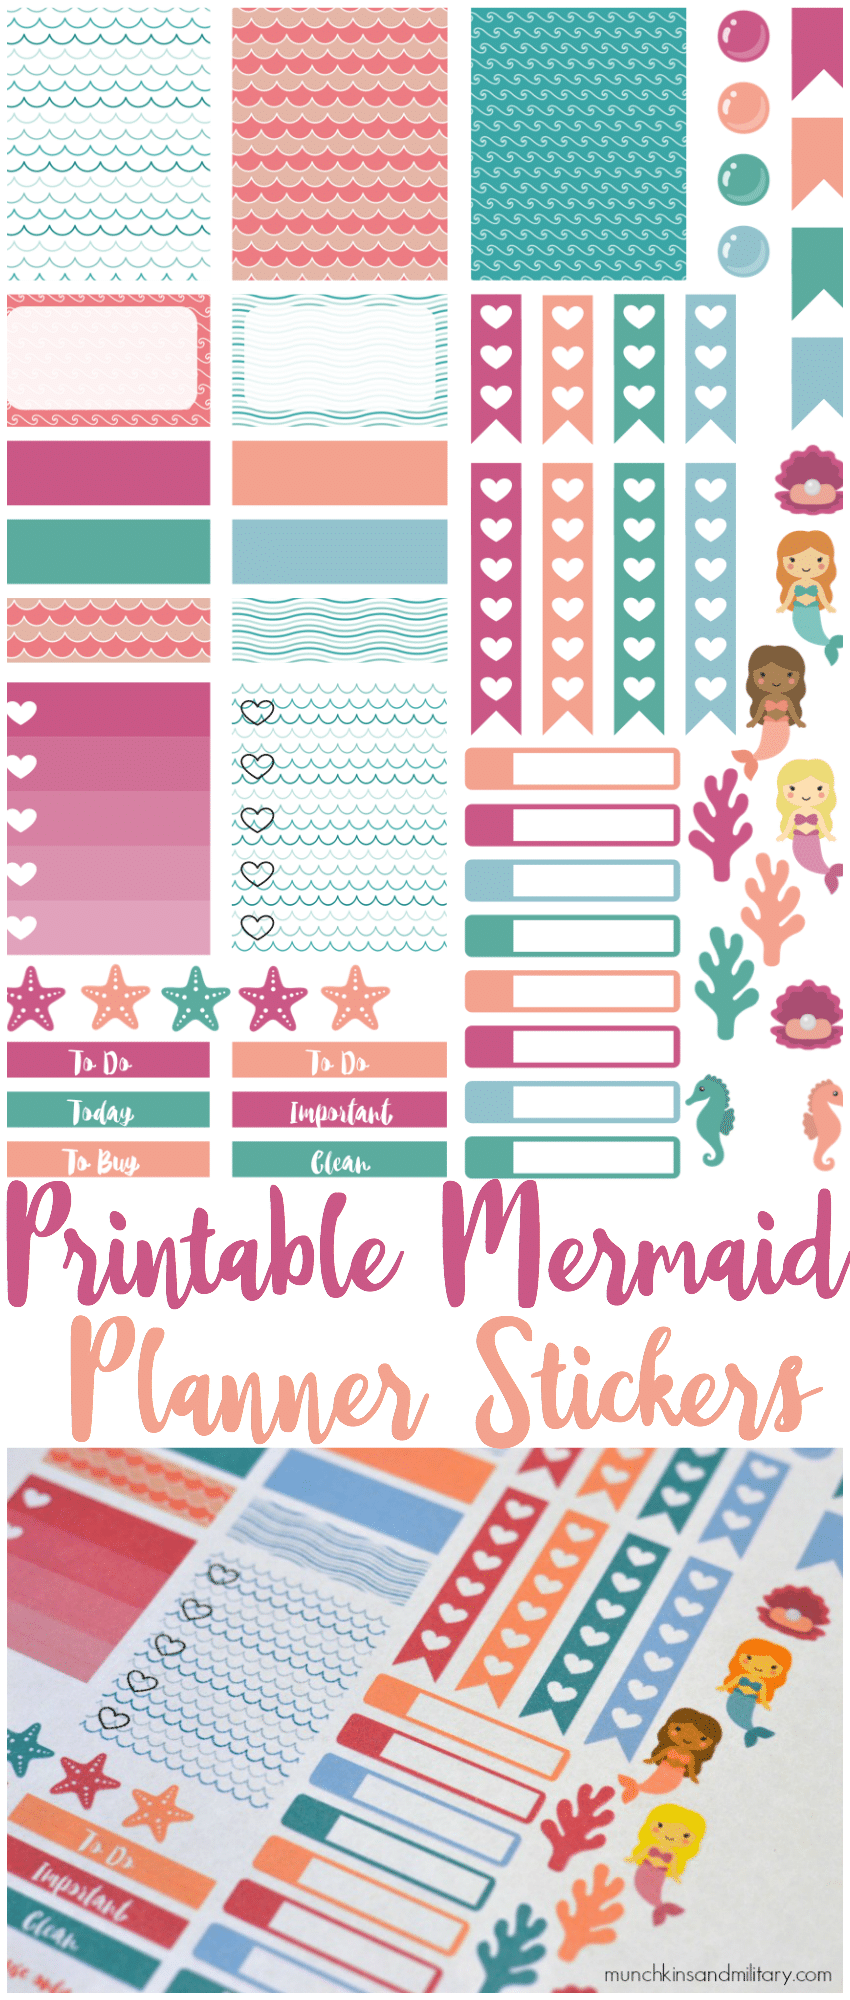 Free mermaid planner stickers for Erin Condren Life Planner - http://wp.me/p5ol3R-13o - #planneraddict